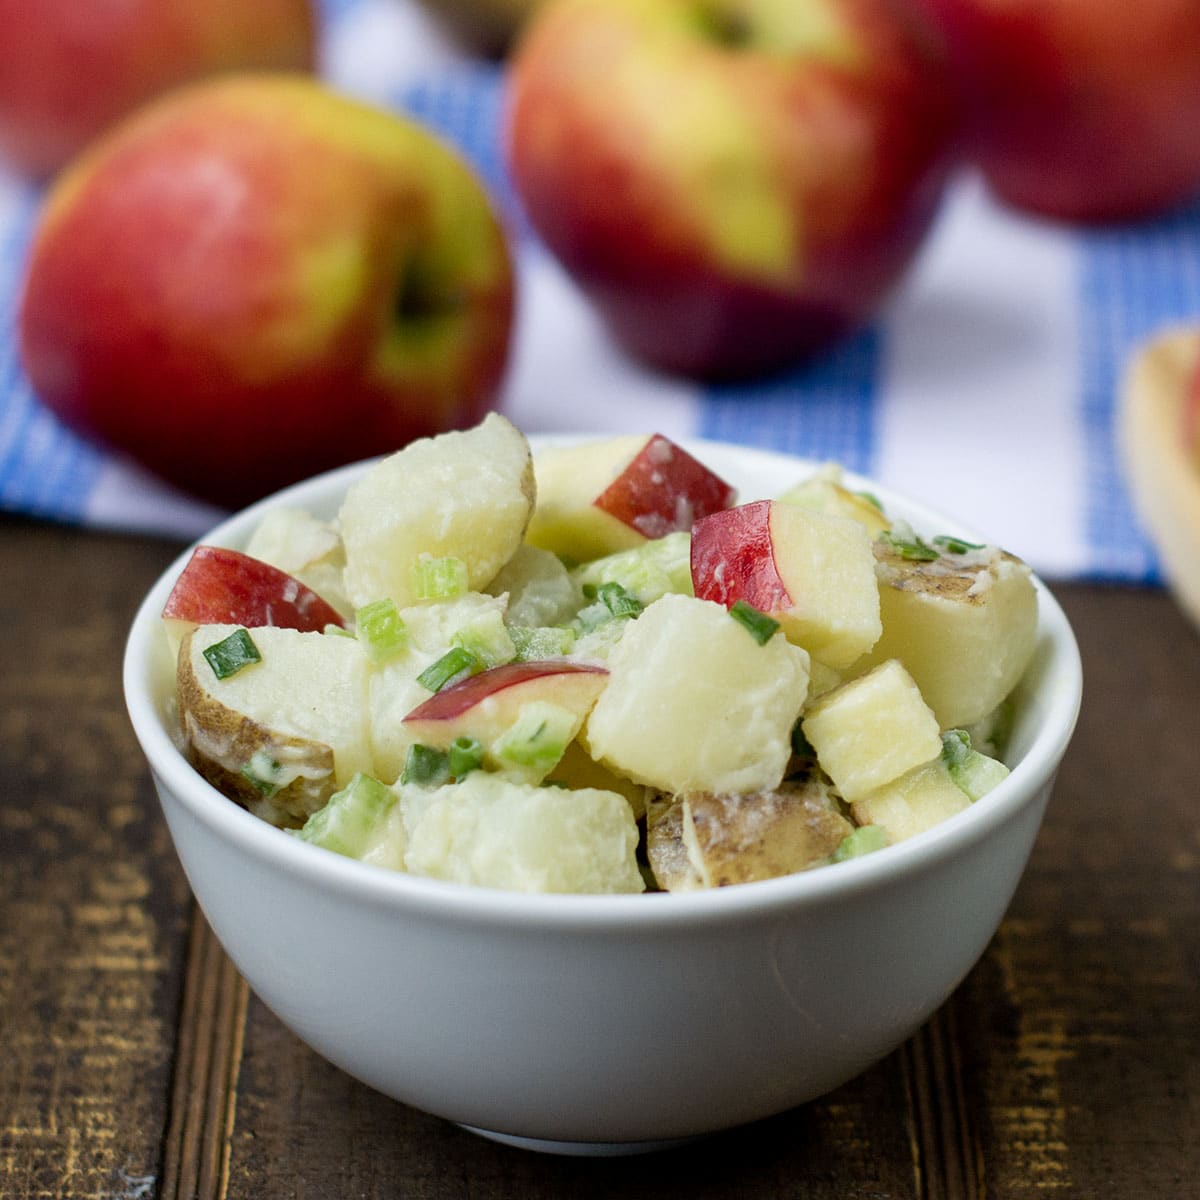 White bowl of potato salad with apples.